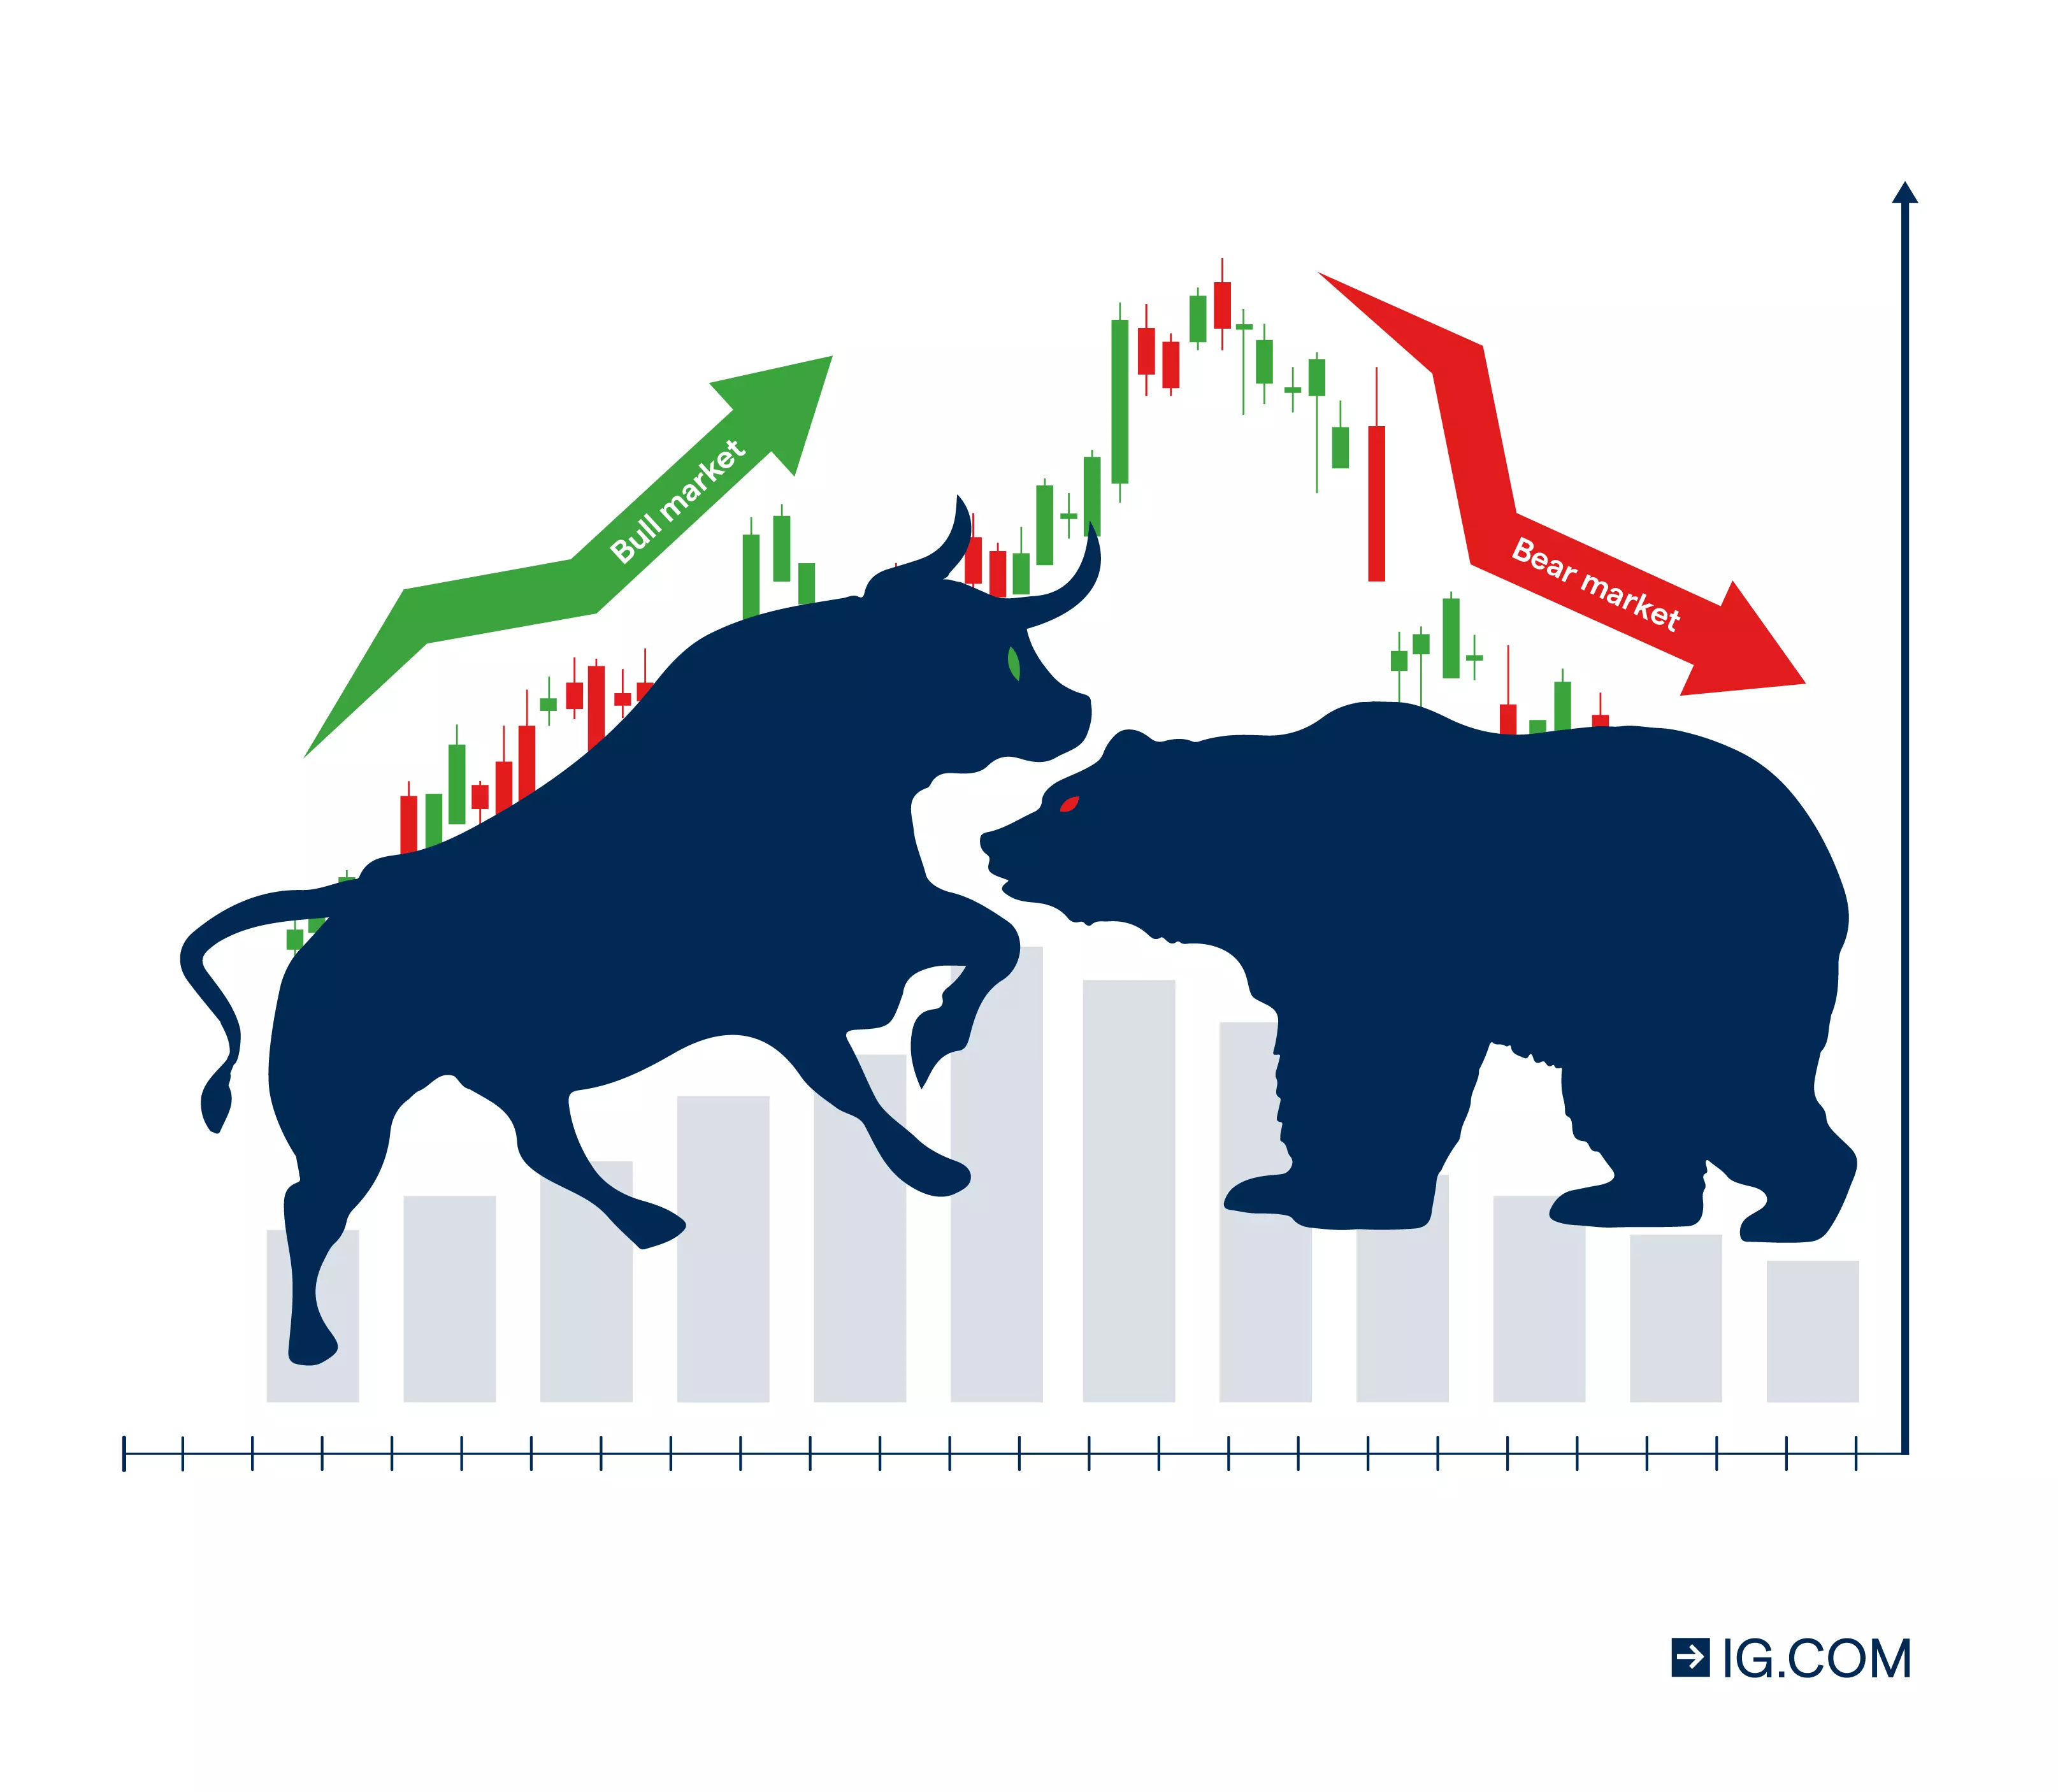 Bull/bear market